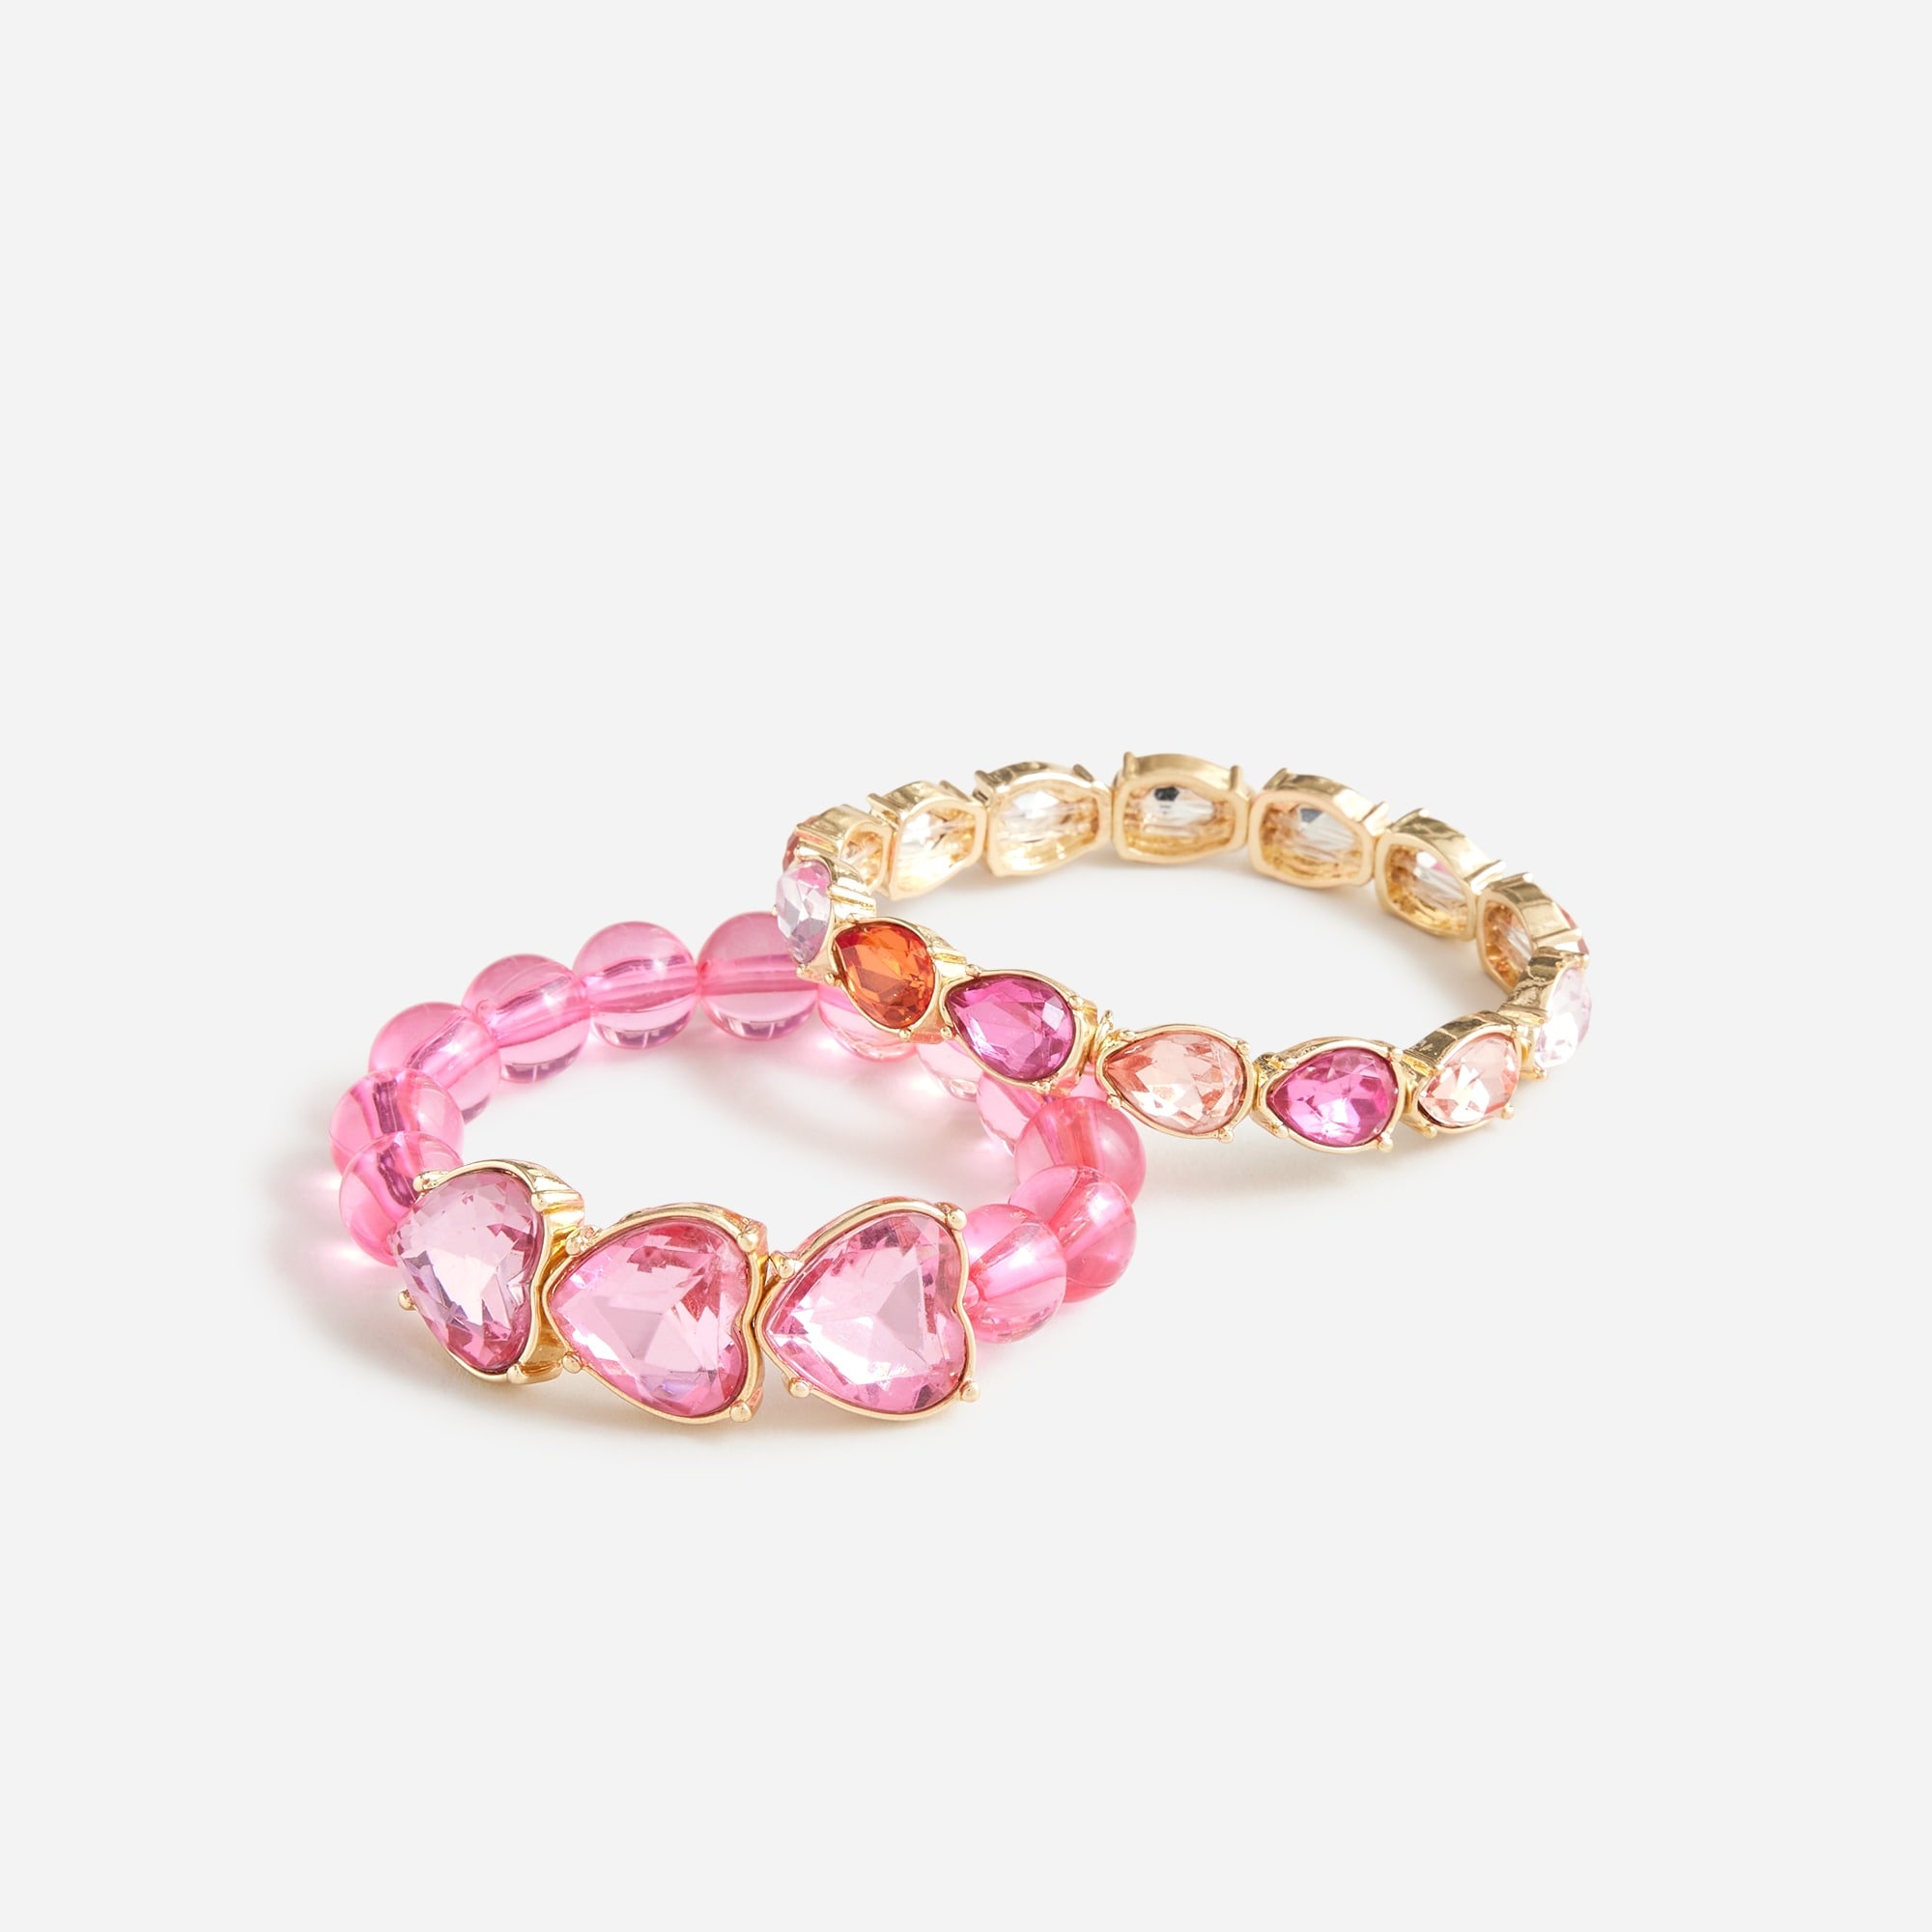  Girls' heart charm bracelets set